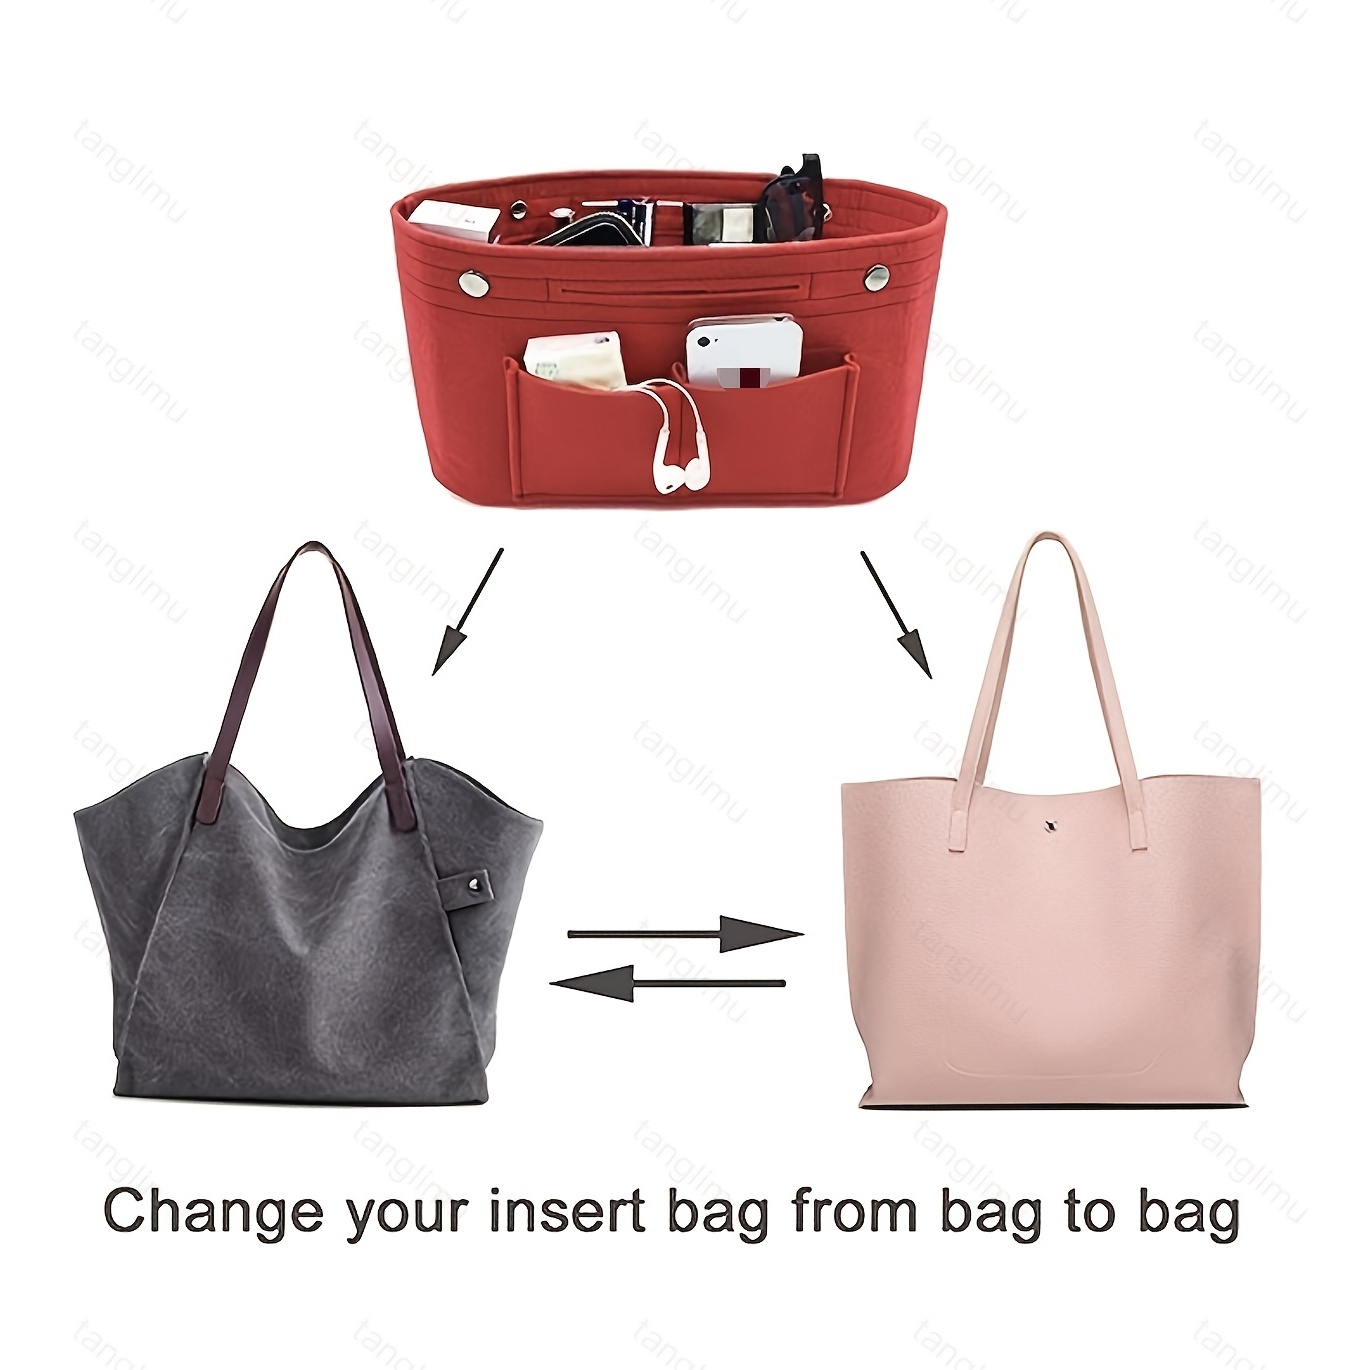 Spencer Purse Organizer Insert Bag in Bag Felt Fabric Handbag Tote